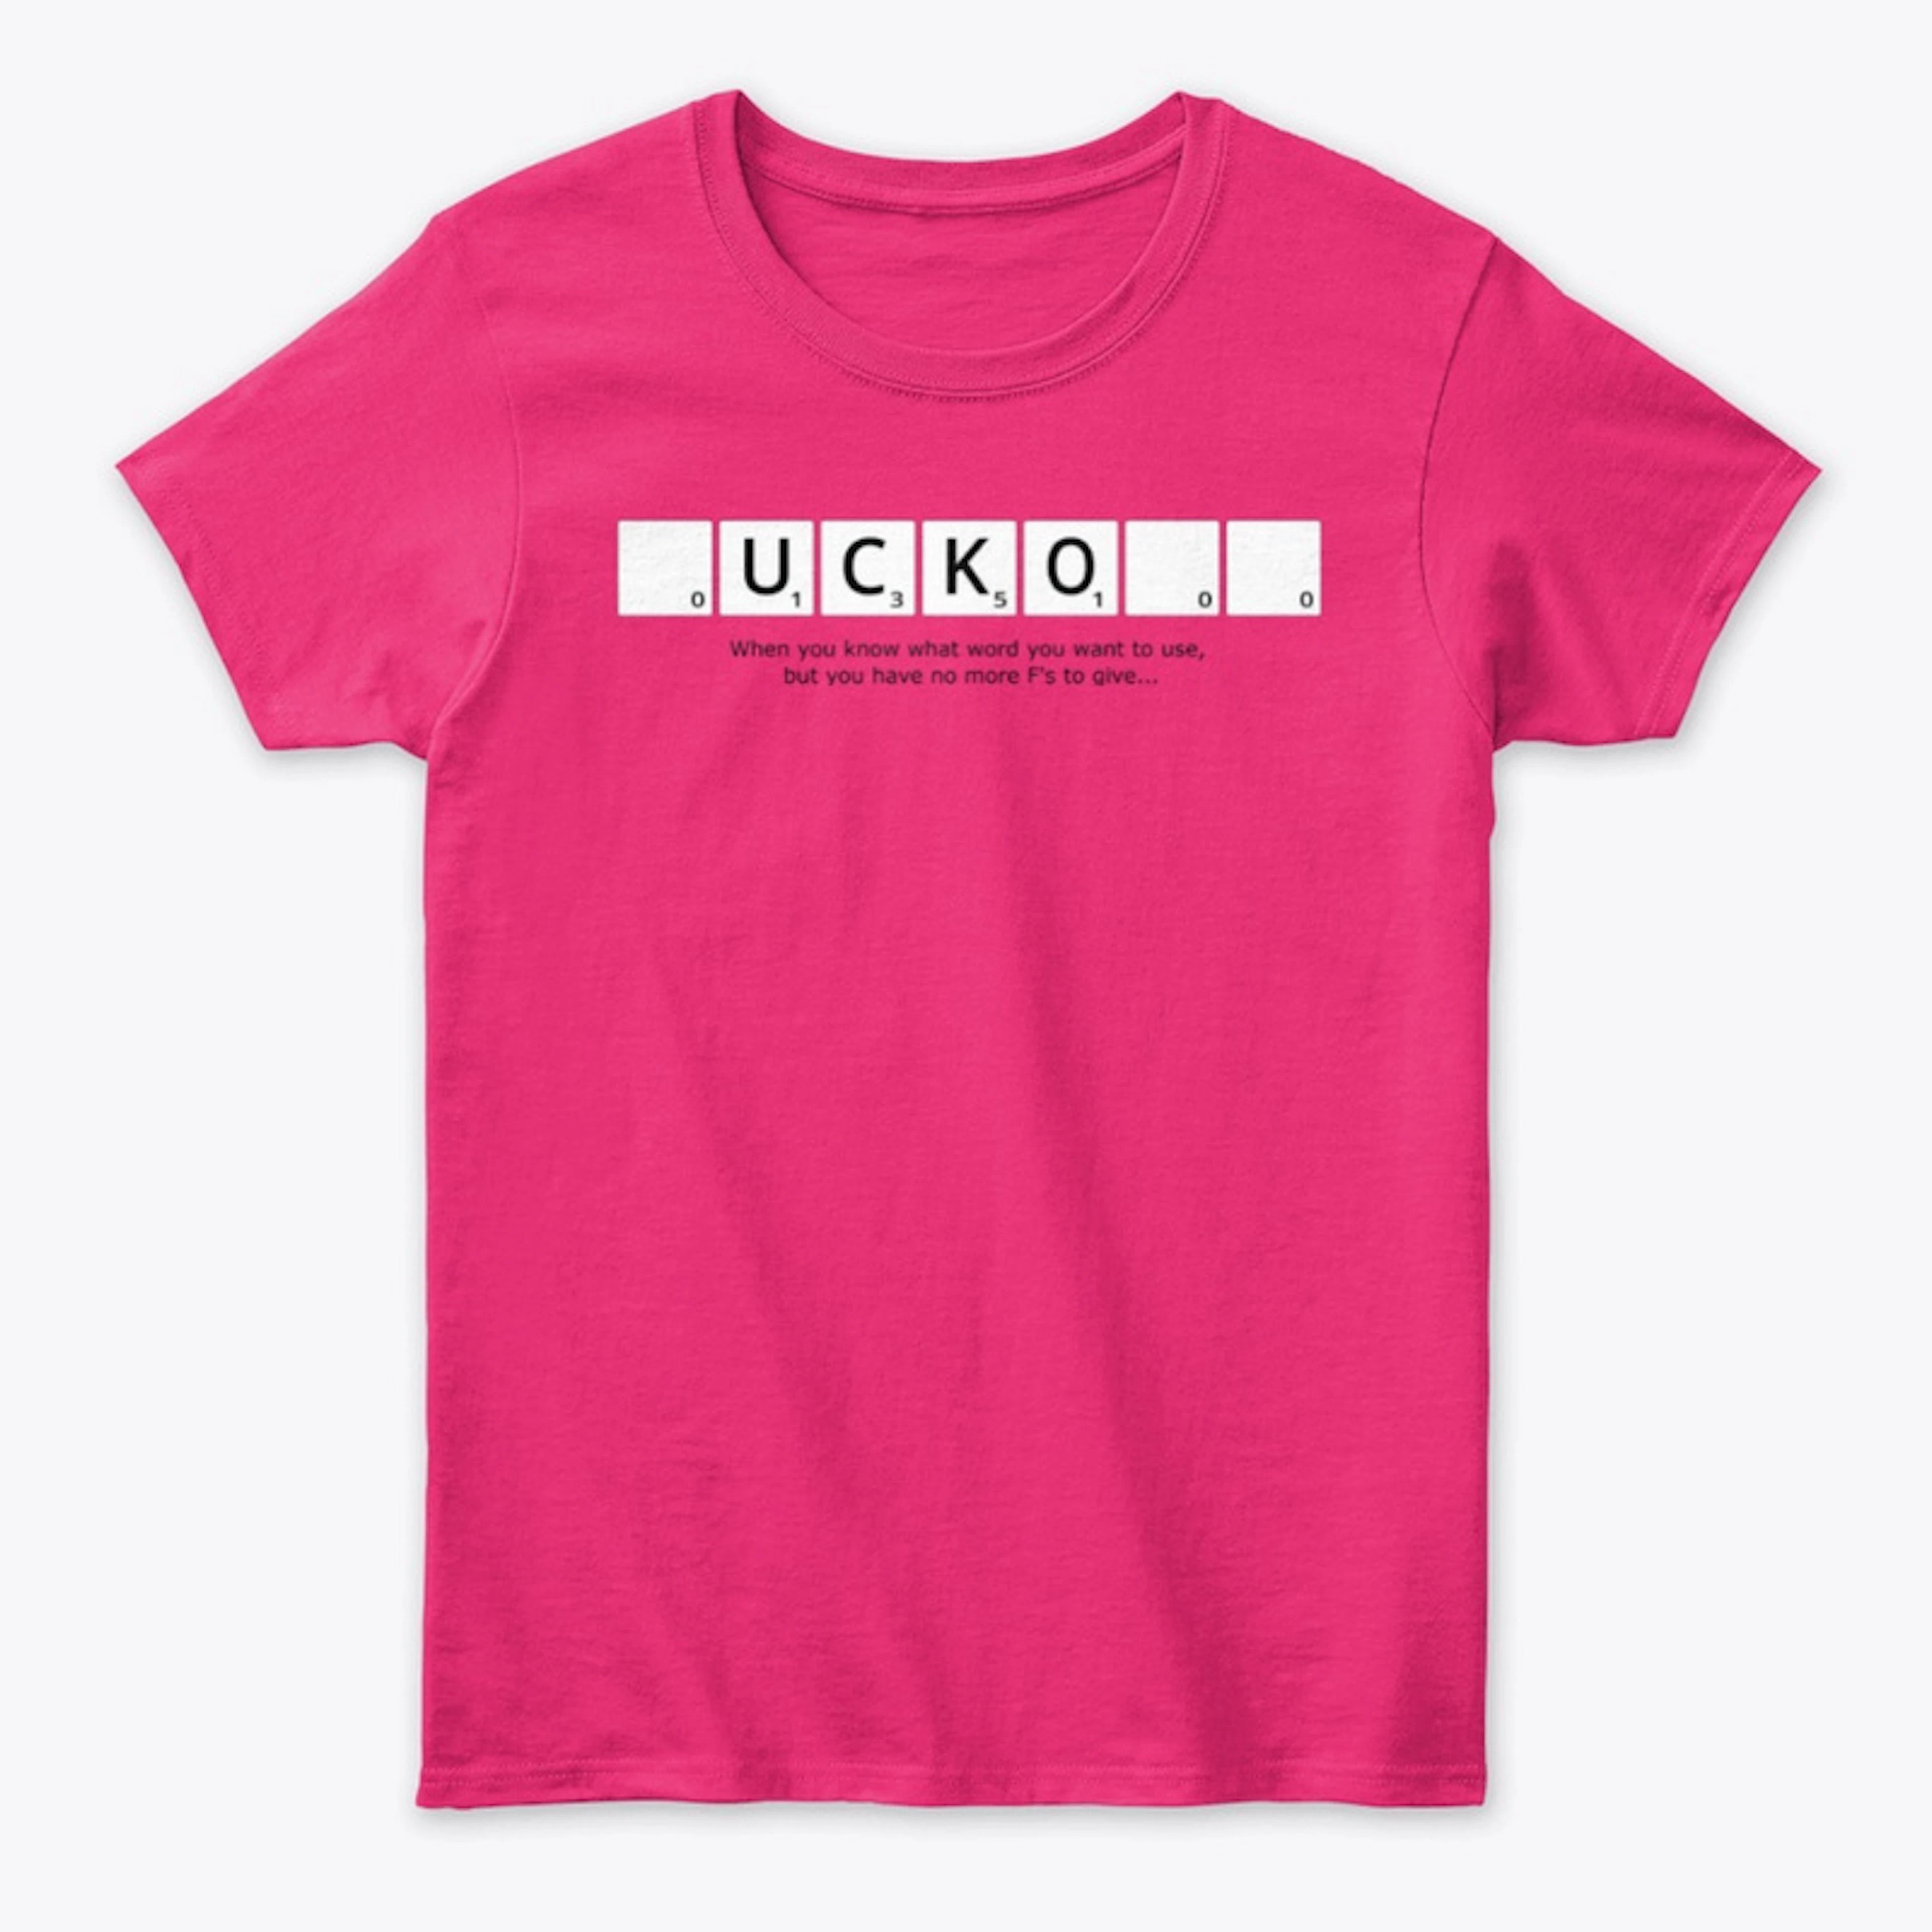 Womens _UCKO__ Scrabble Shirt